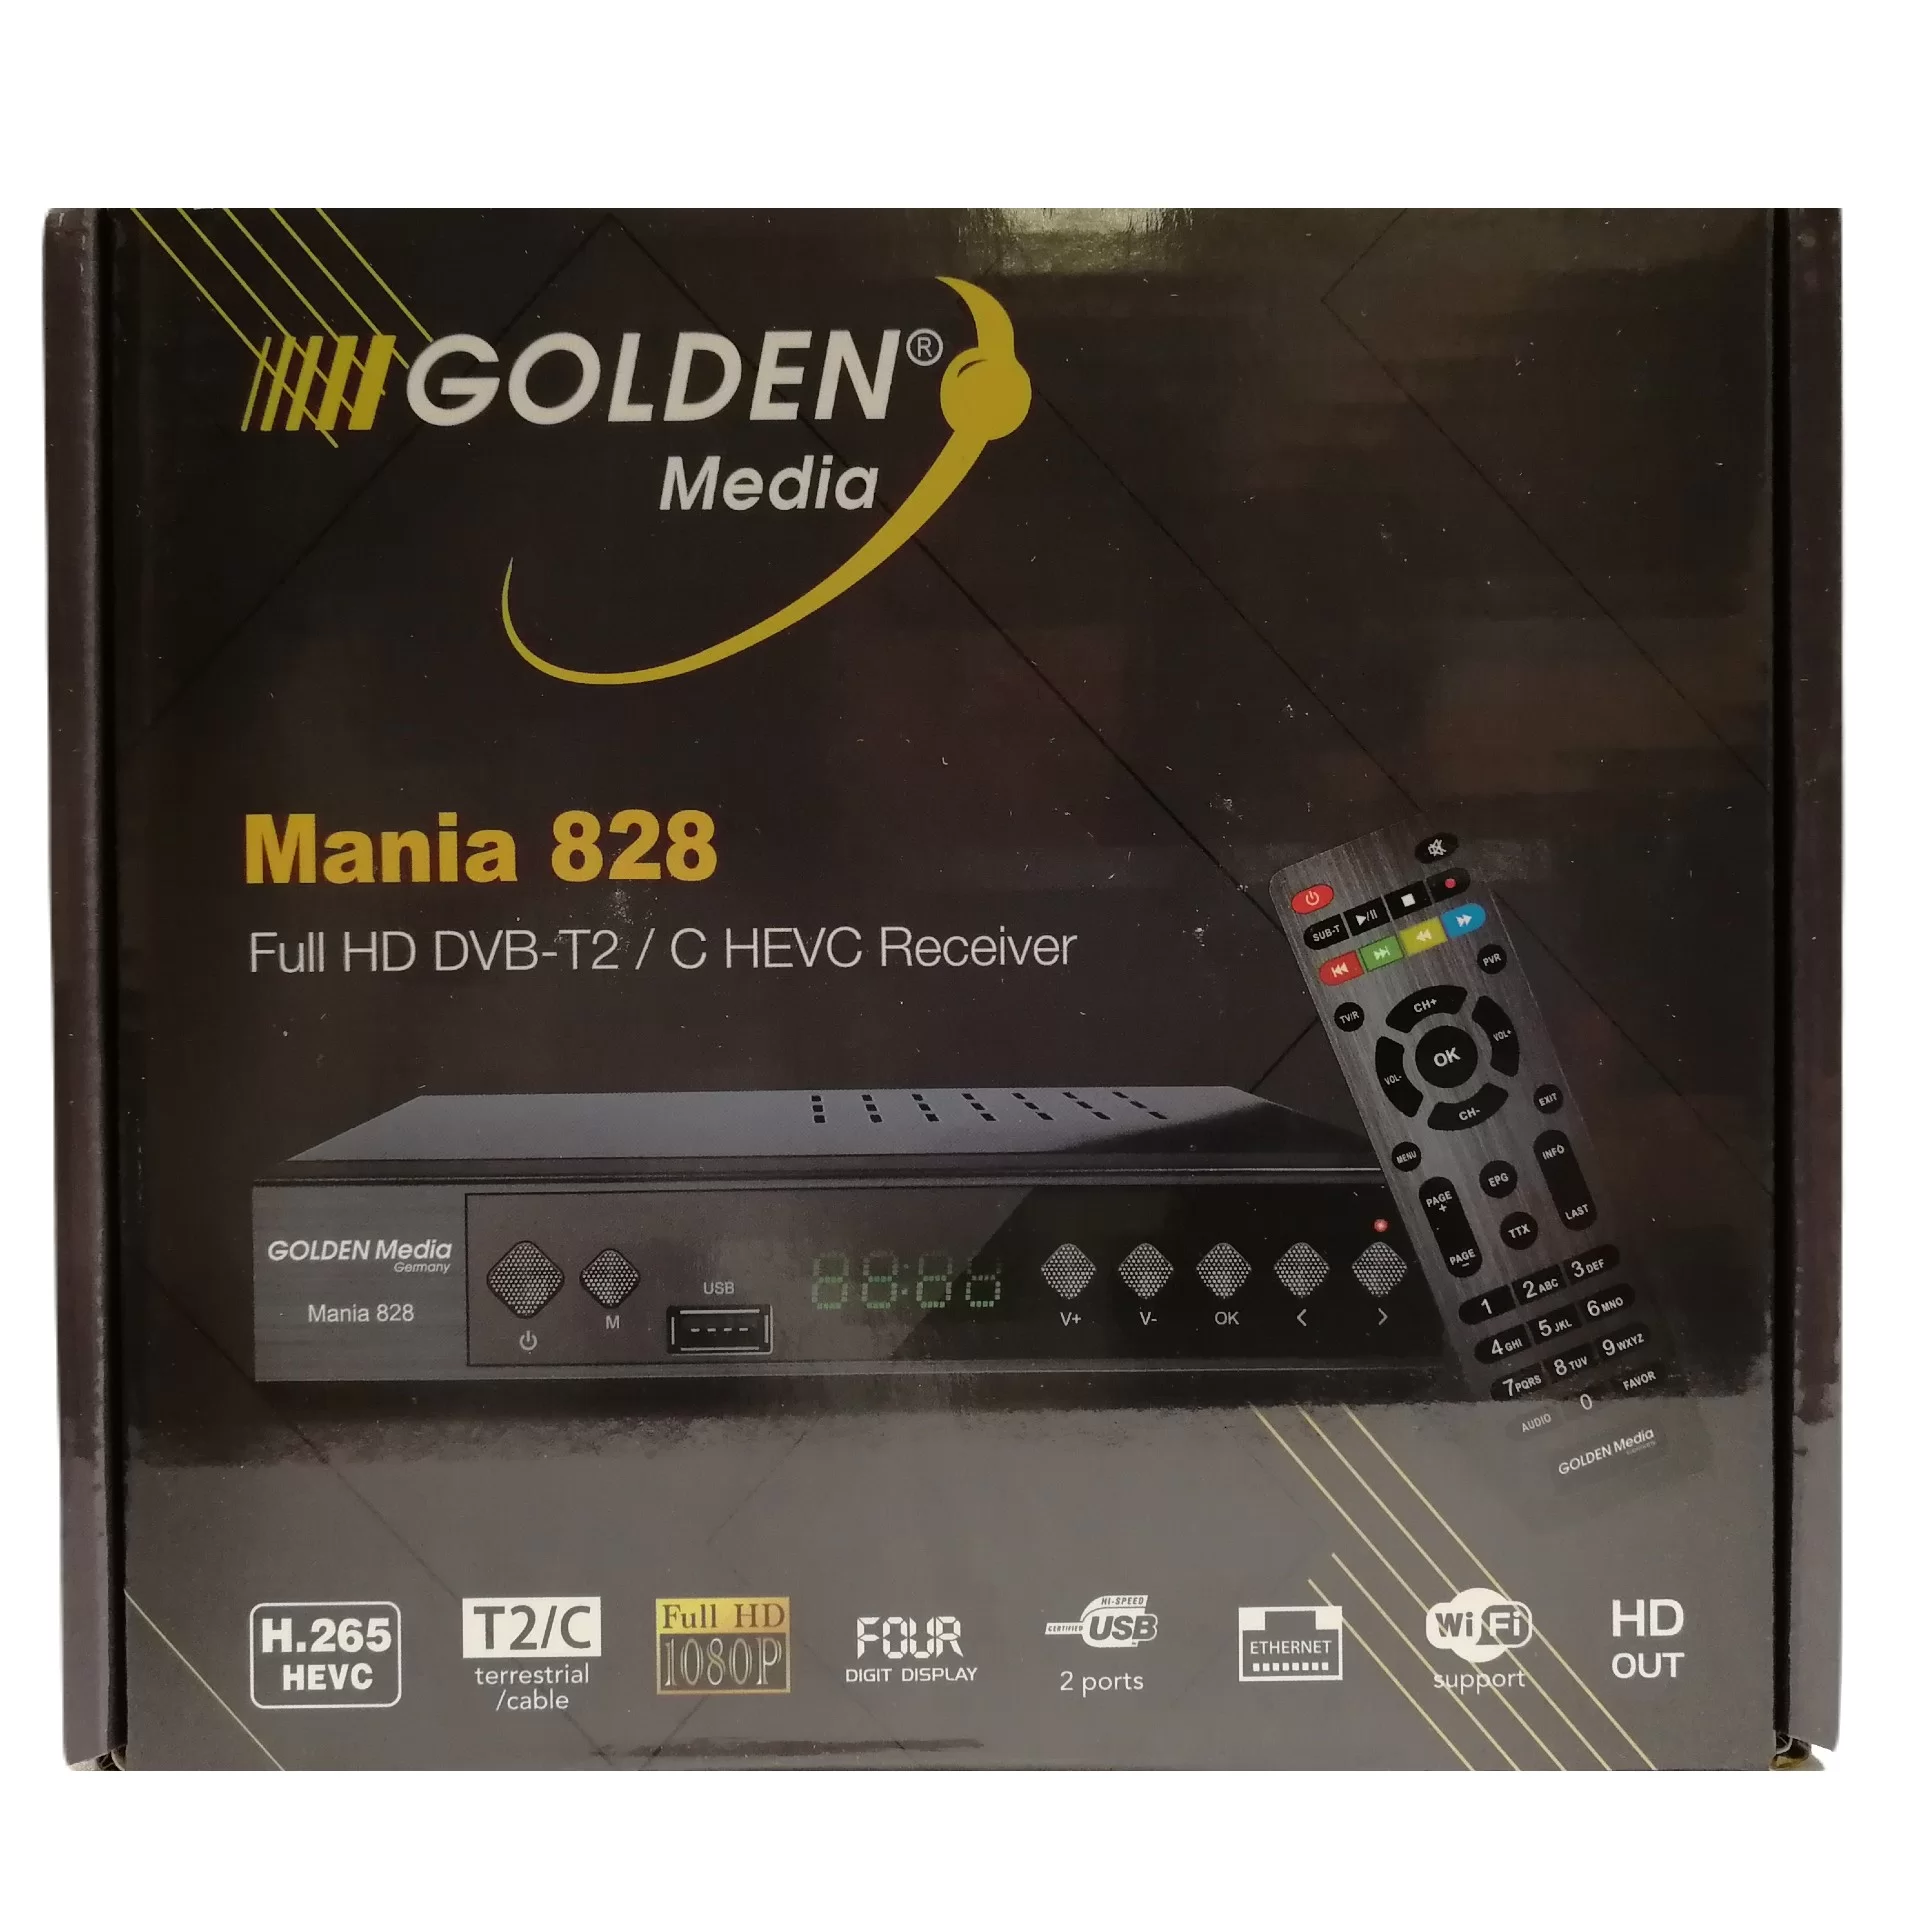 Full HD terrestrial receiver DVB-T2 (H.265) from